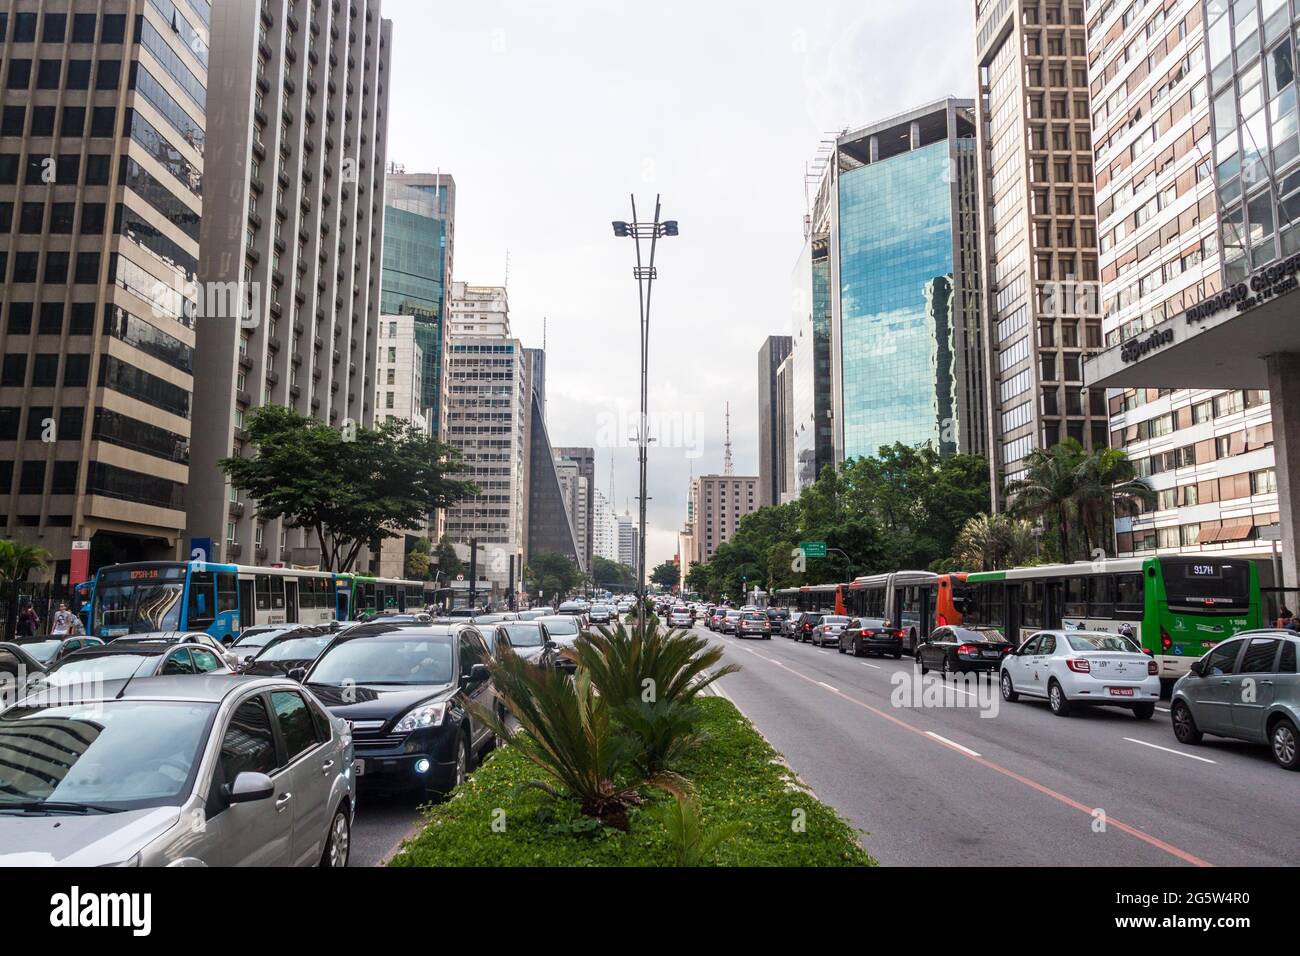 SAO PAULO, BRAZIL - FEBRUARY 2, 2015: View of skyscrapers along Avenida Paulista in Sao Paulo, Brazil Stock Photo